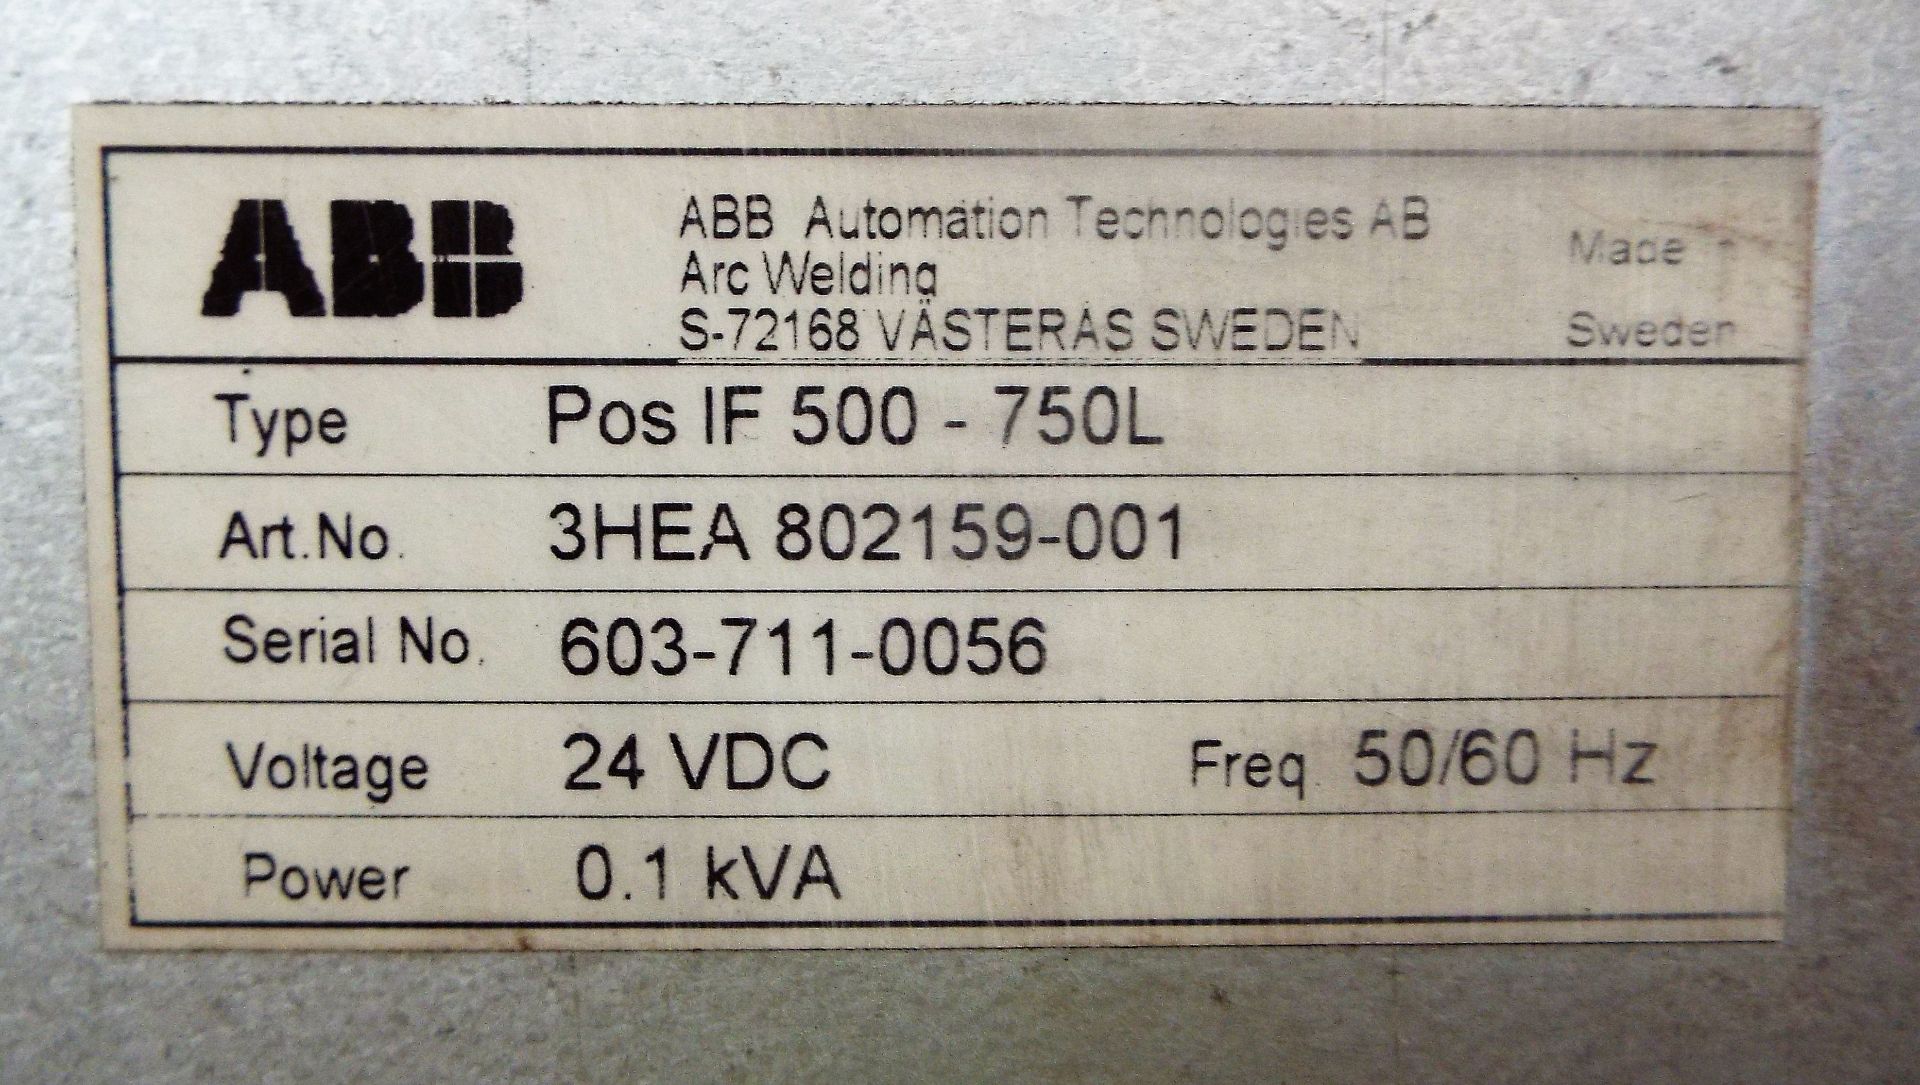 ABB-IRB-2400L-IRC5 Mig Welding Robot Set - Image 10 of 27